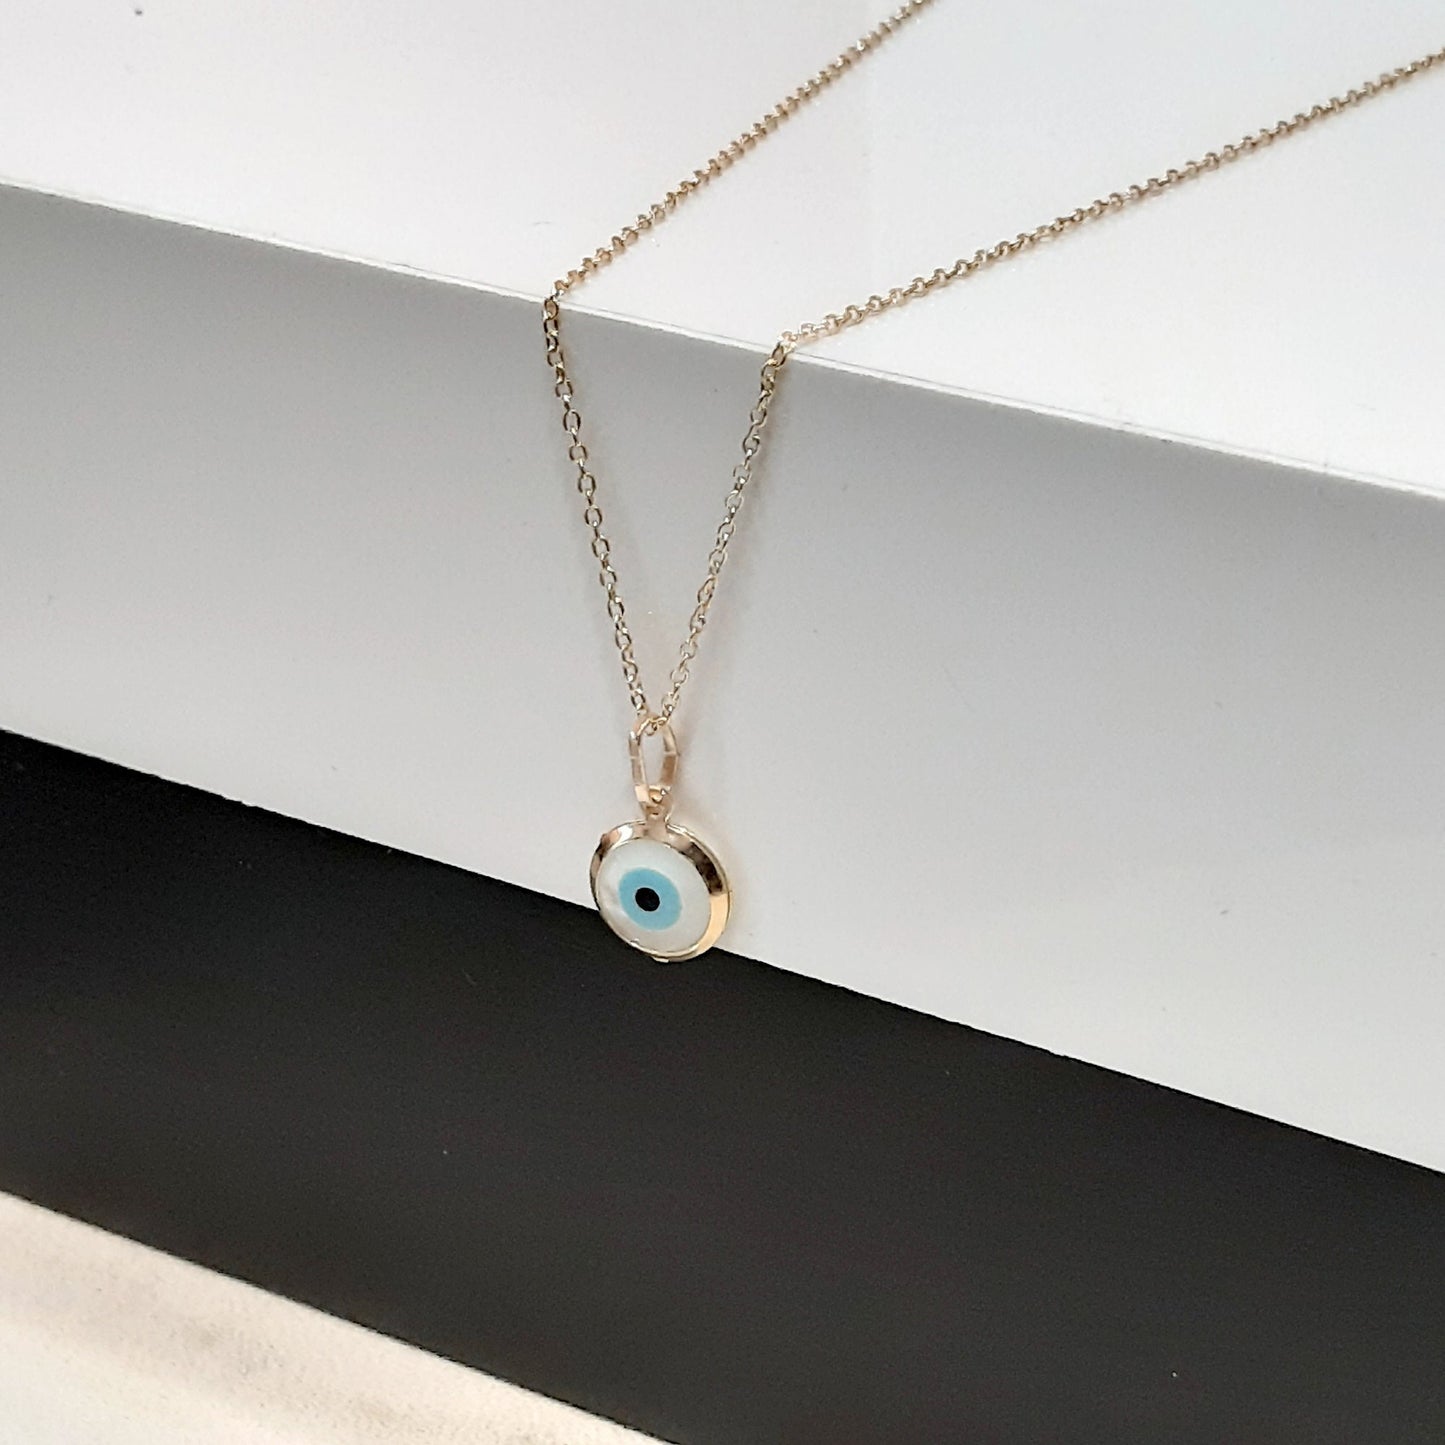 Solid Gold 14k Evil Eye Necklace White Blue Evil Eye Penant Charm evil eye, 14k Gold necklace minimal pendant, protection charm gift for her